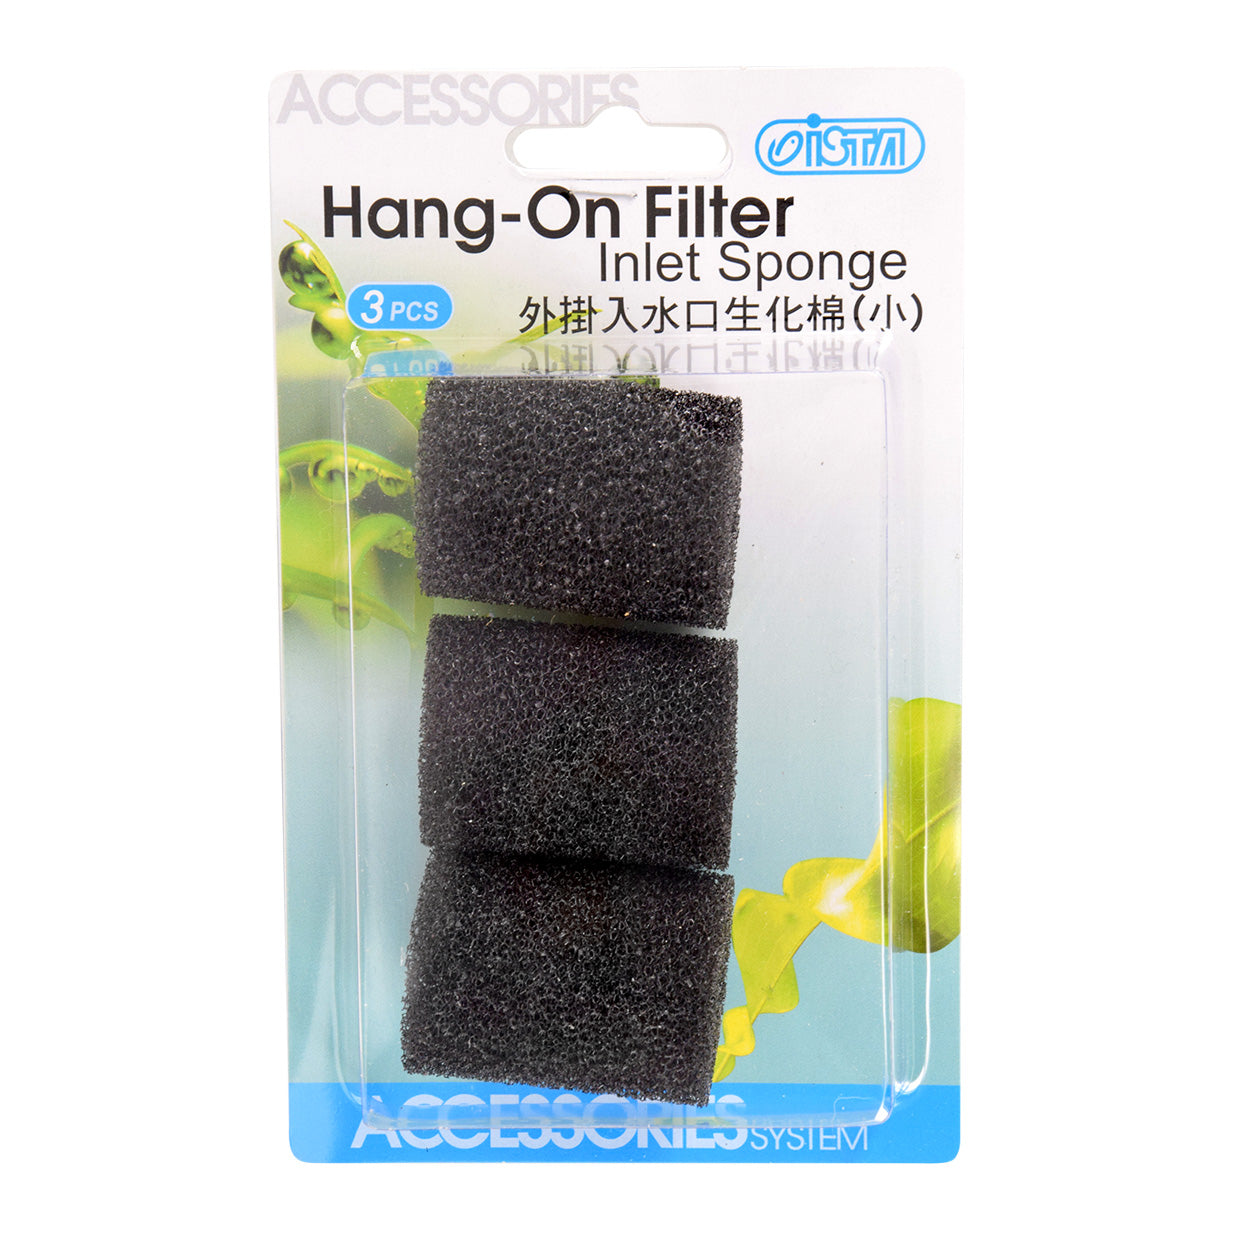 Hang-On Filter Inlet Sponge